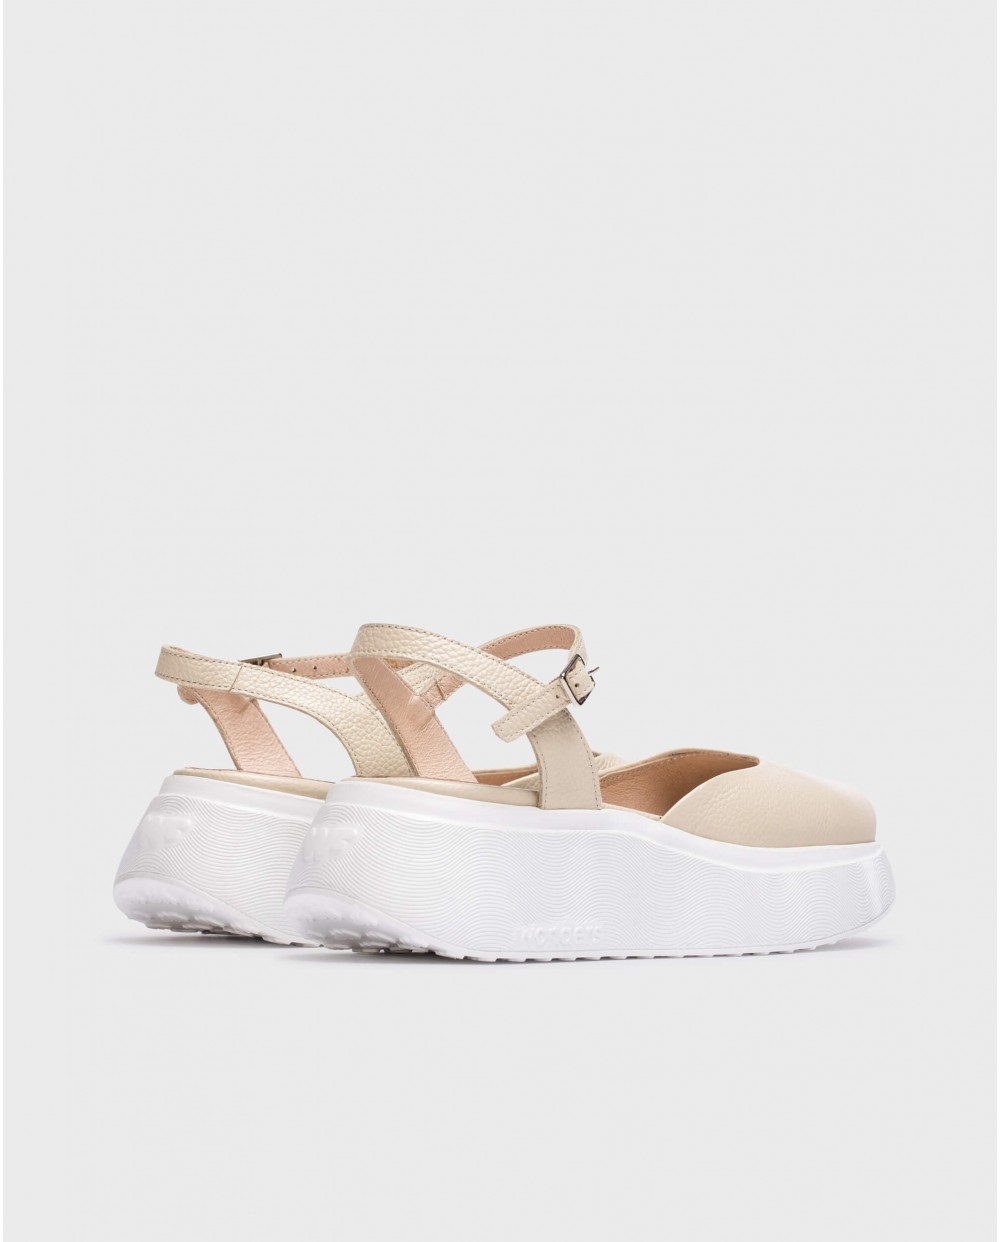 Wonders-Platforms-Cream Manila Shoe